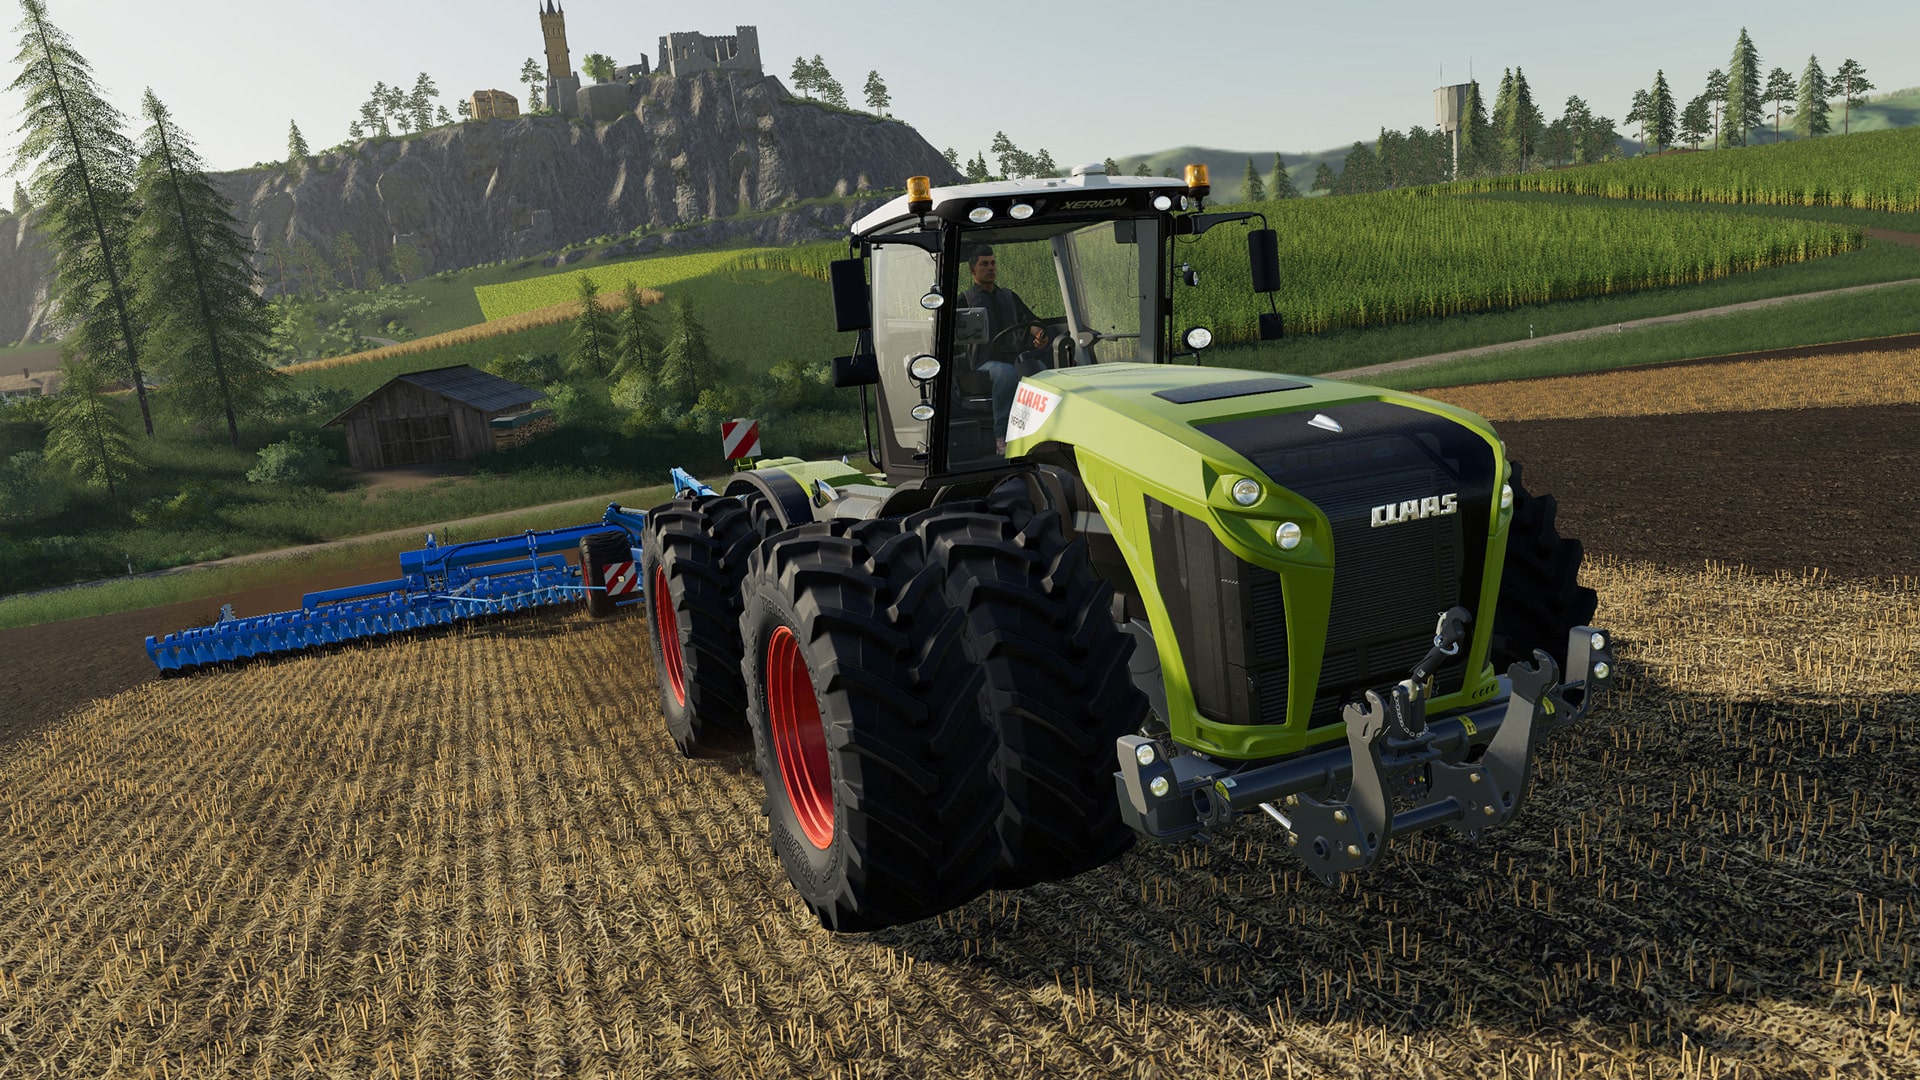 farming simulator playstation 4 farming simulator 19 platinum edition